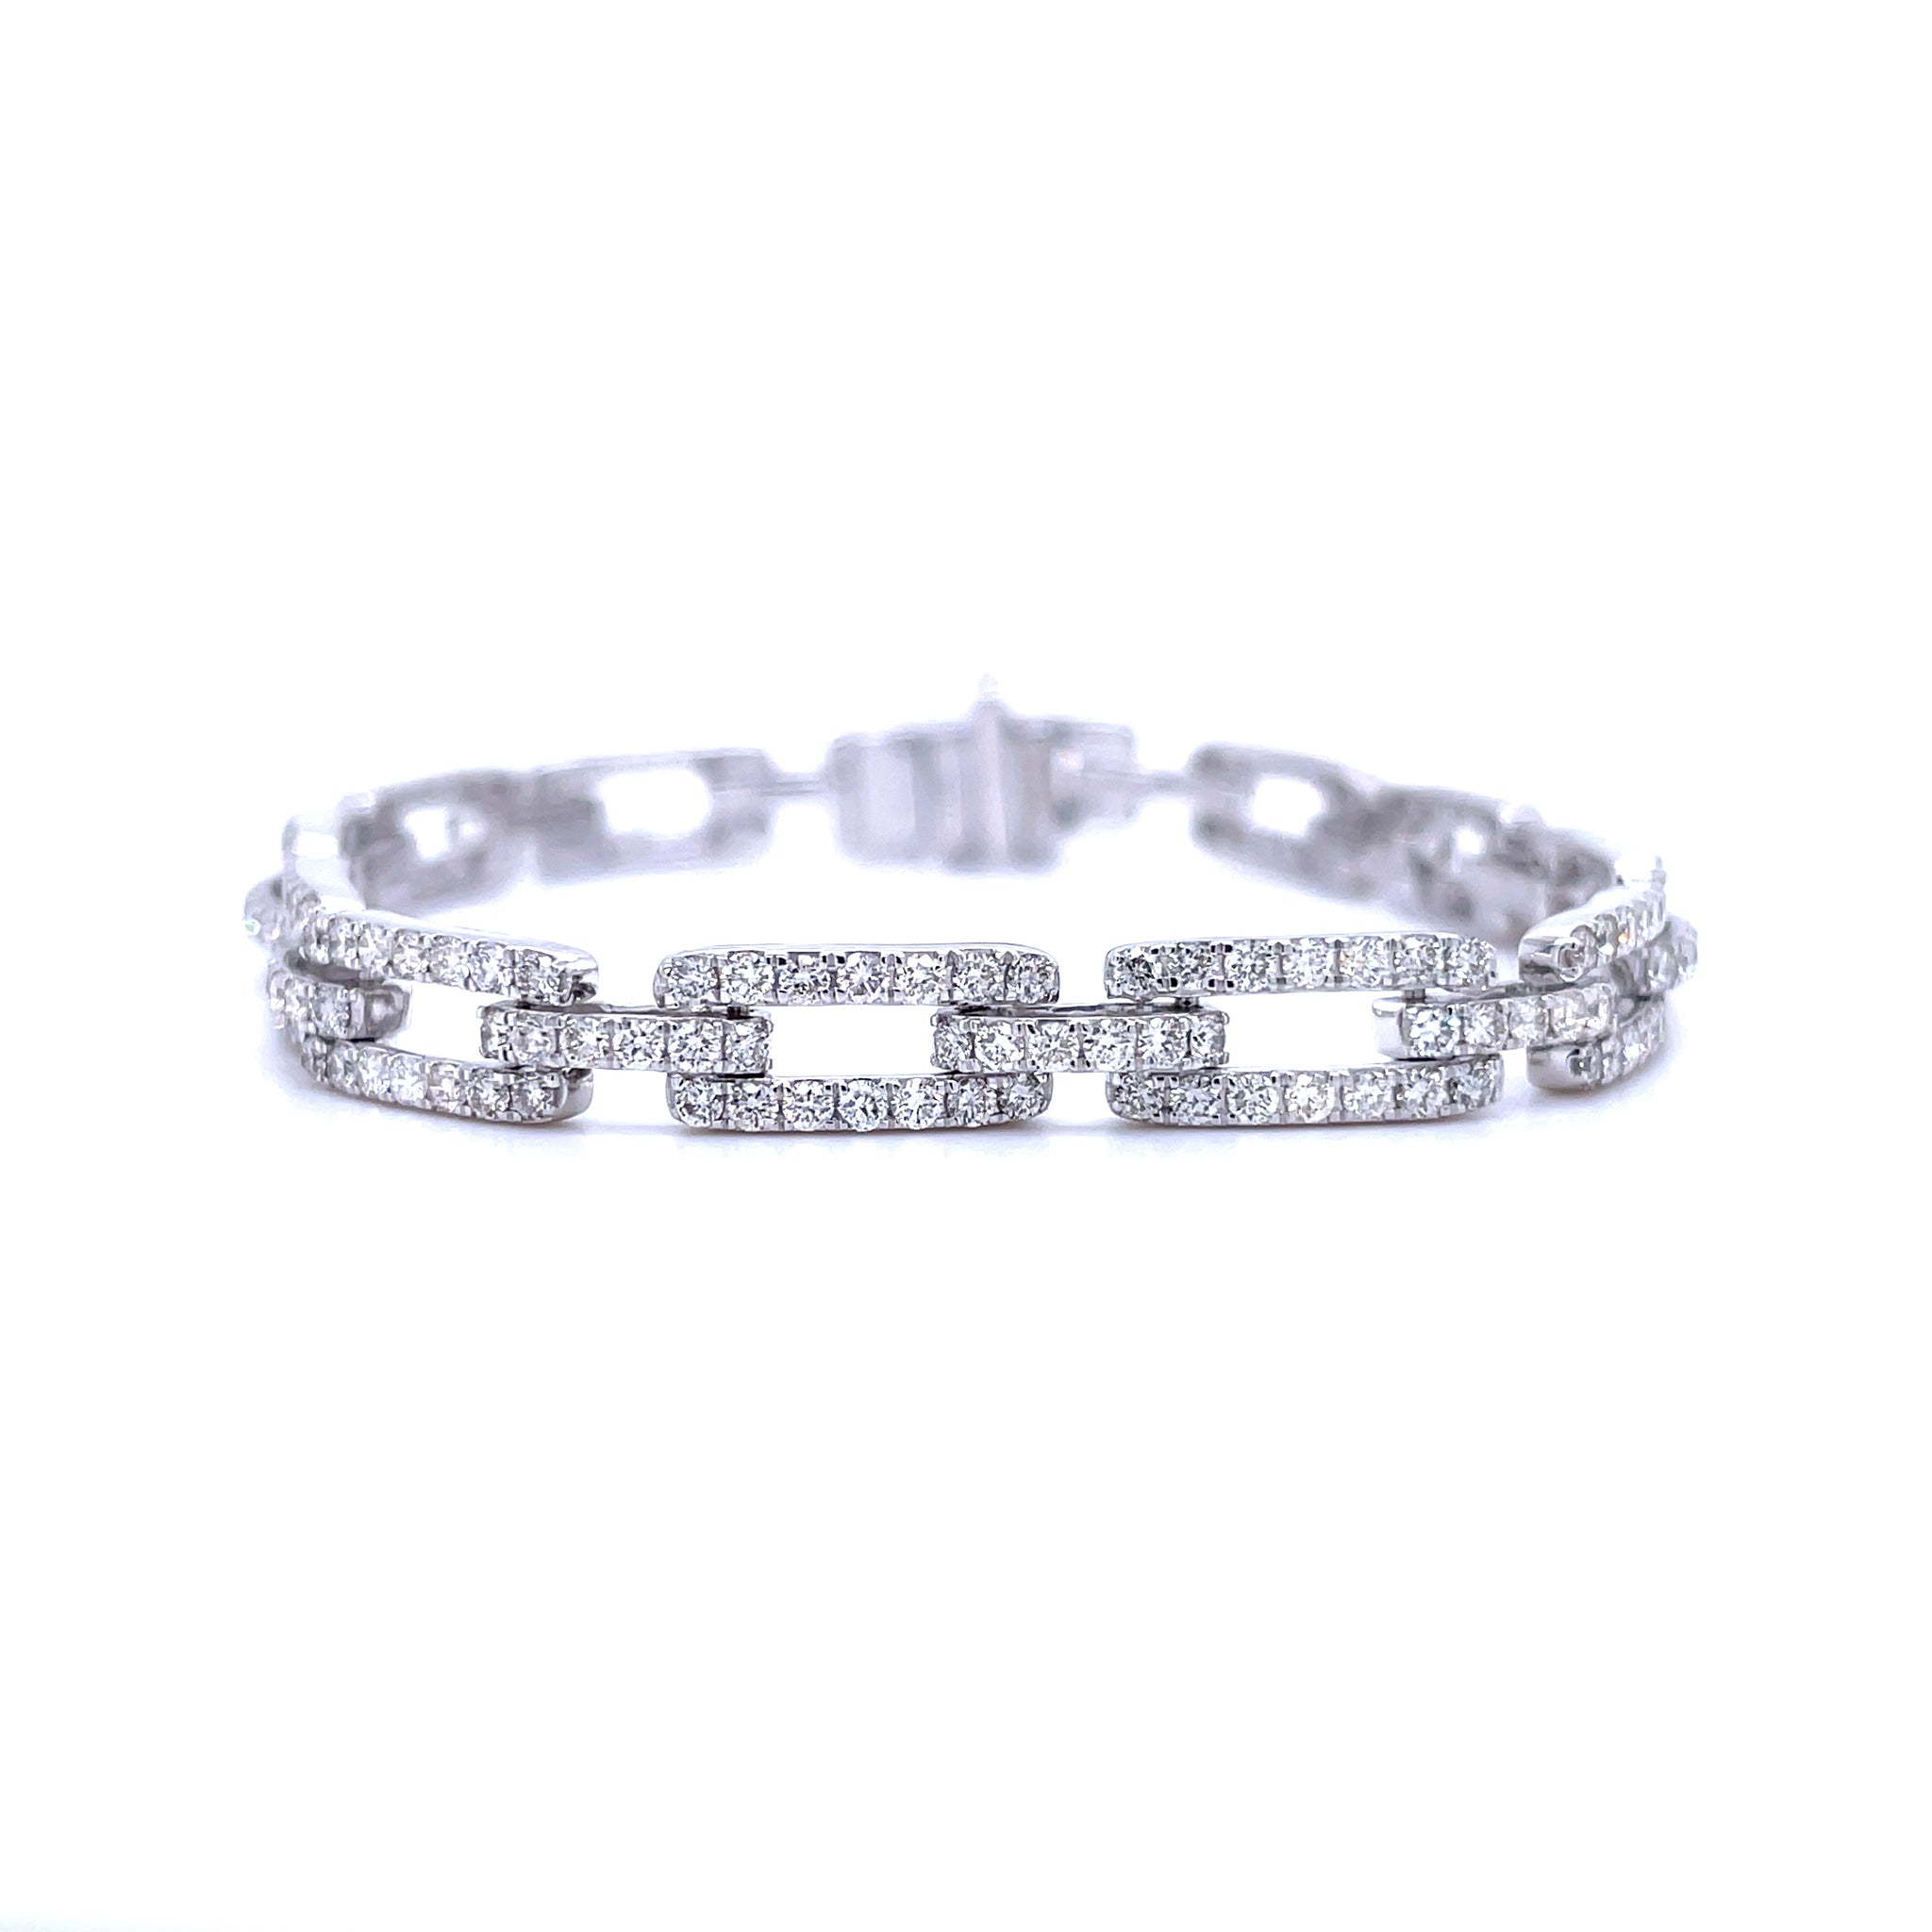 White Gold Diamond Cable Bracelet 4.55ct